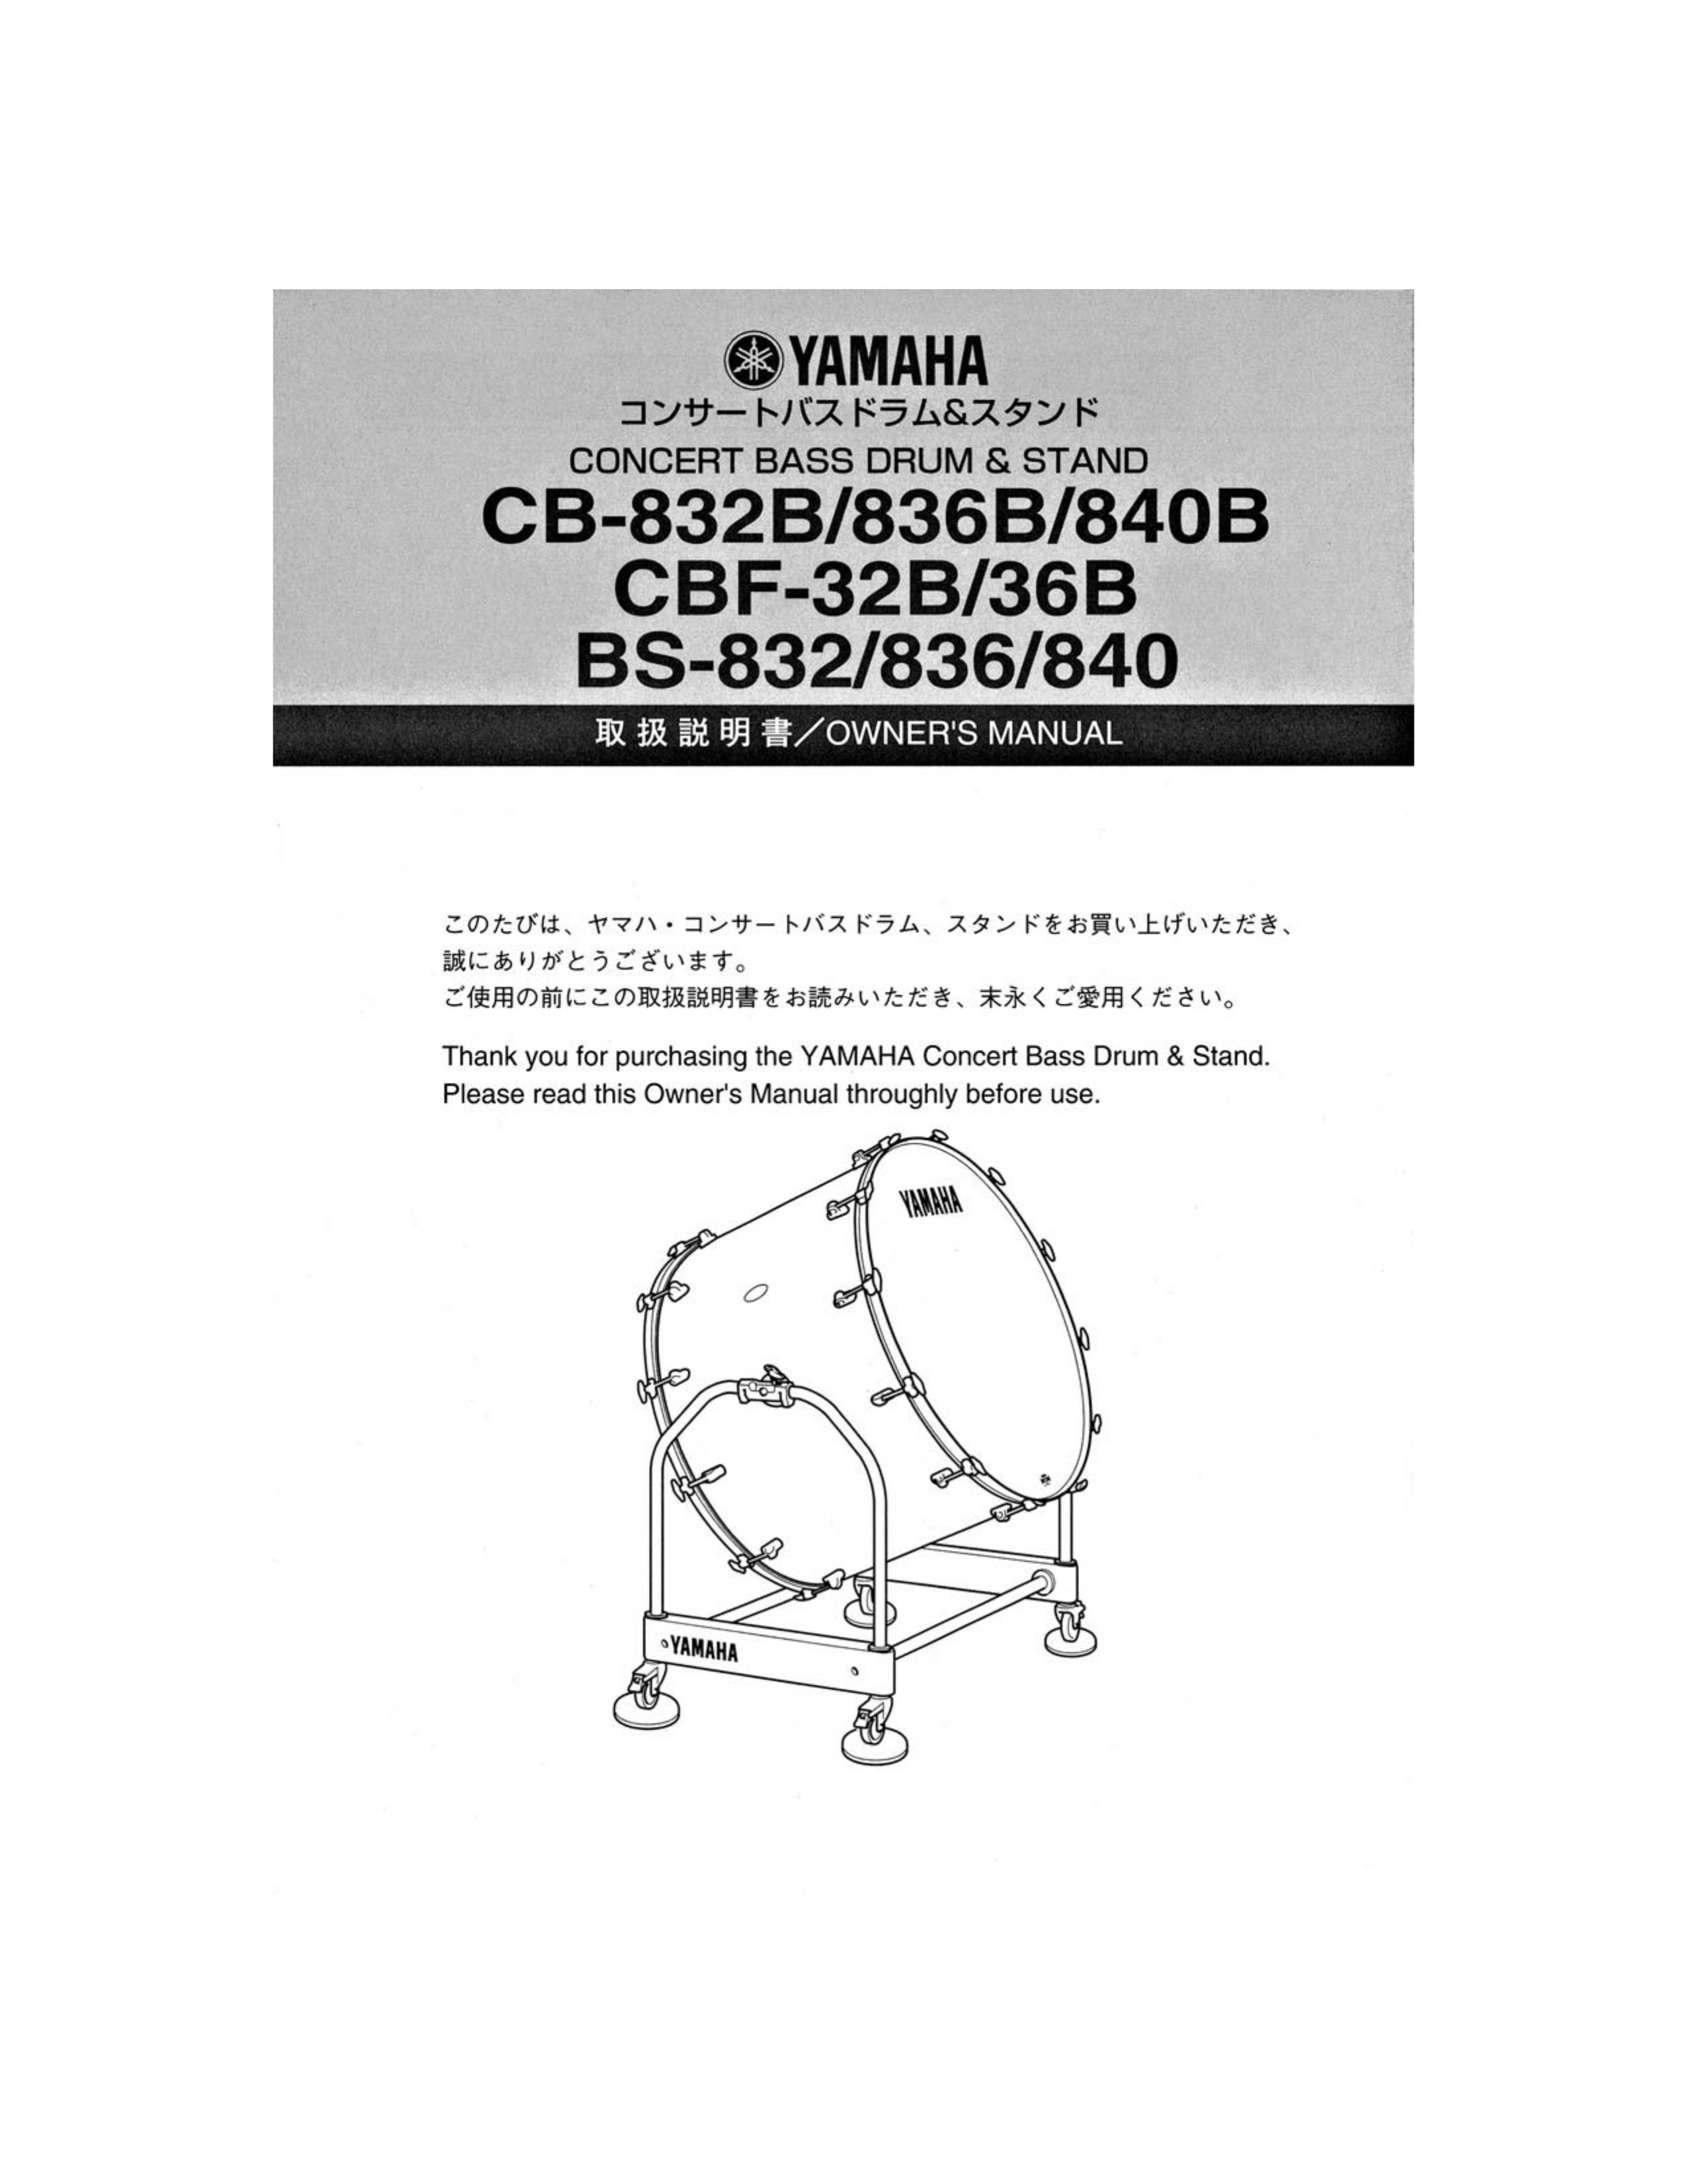 Yamaha CBF-32B/36B Drums User Manual